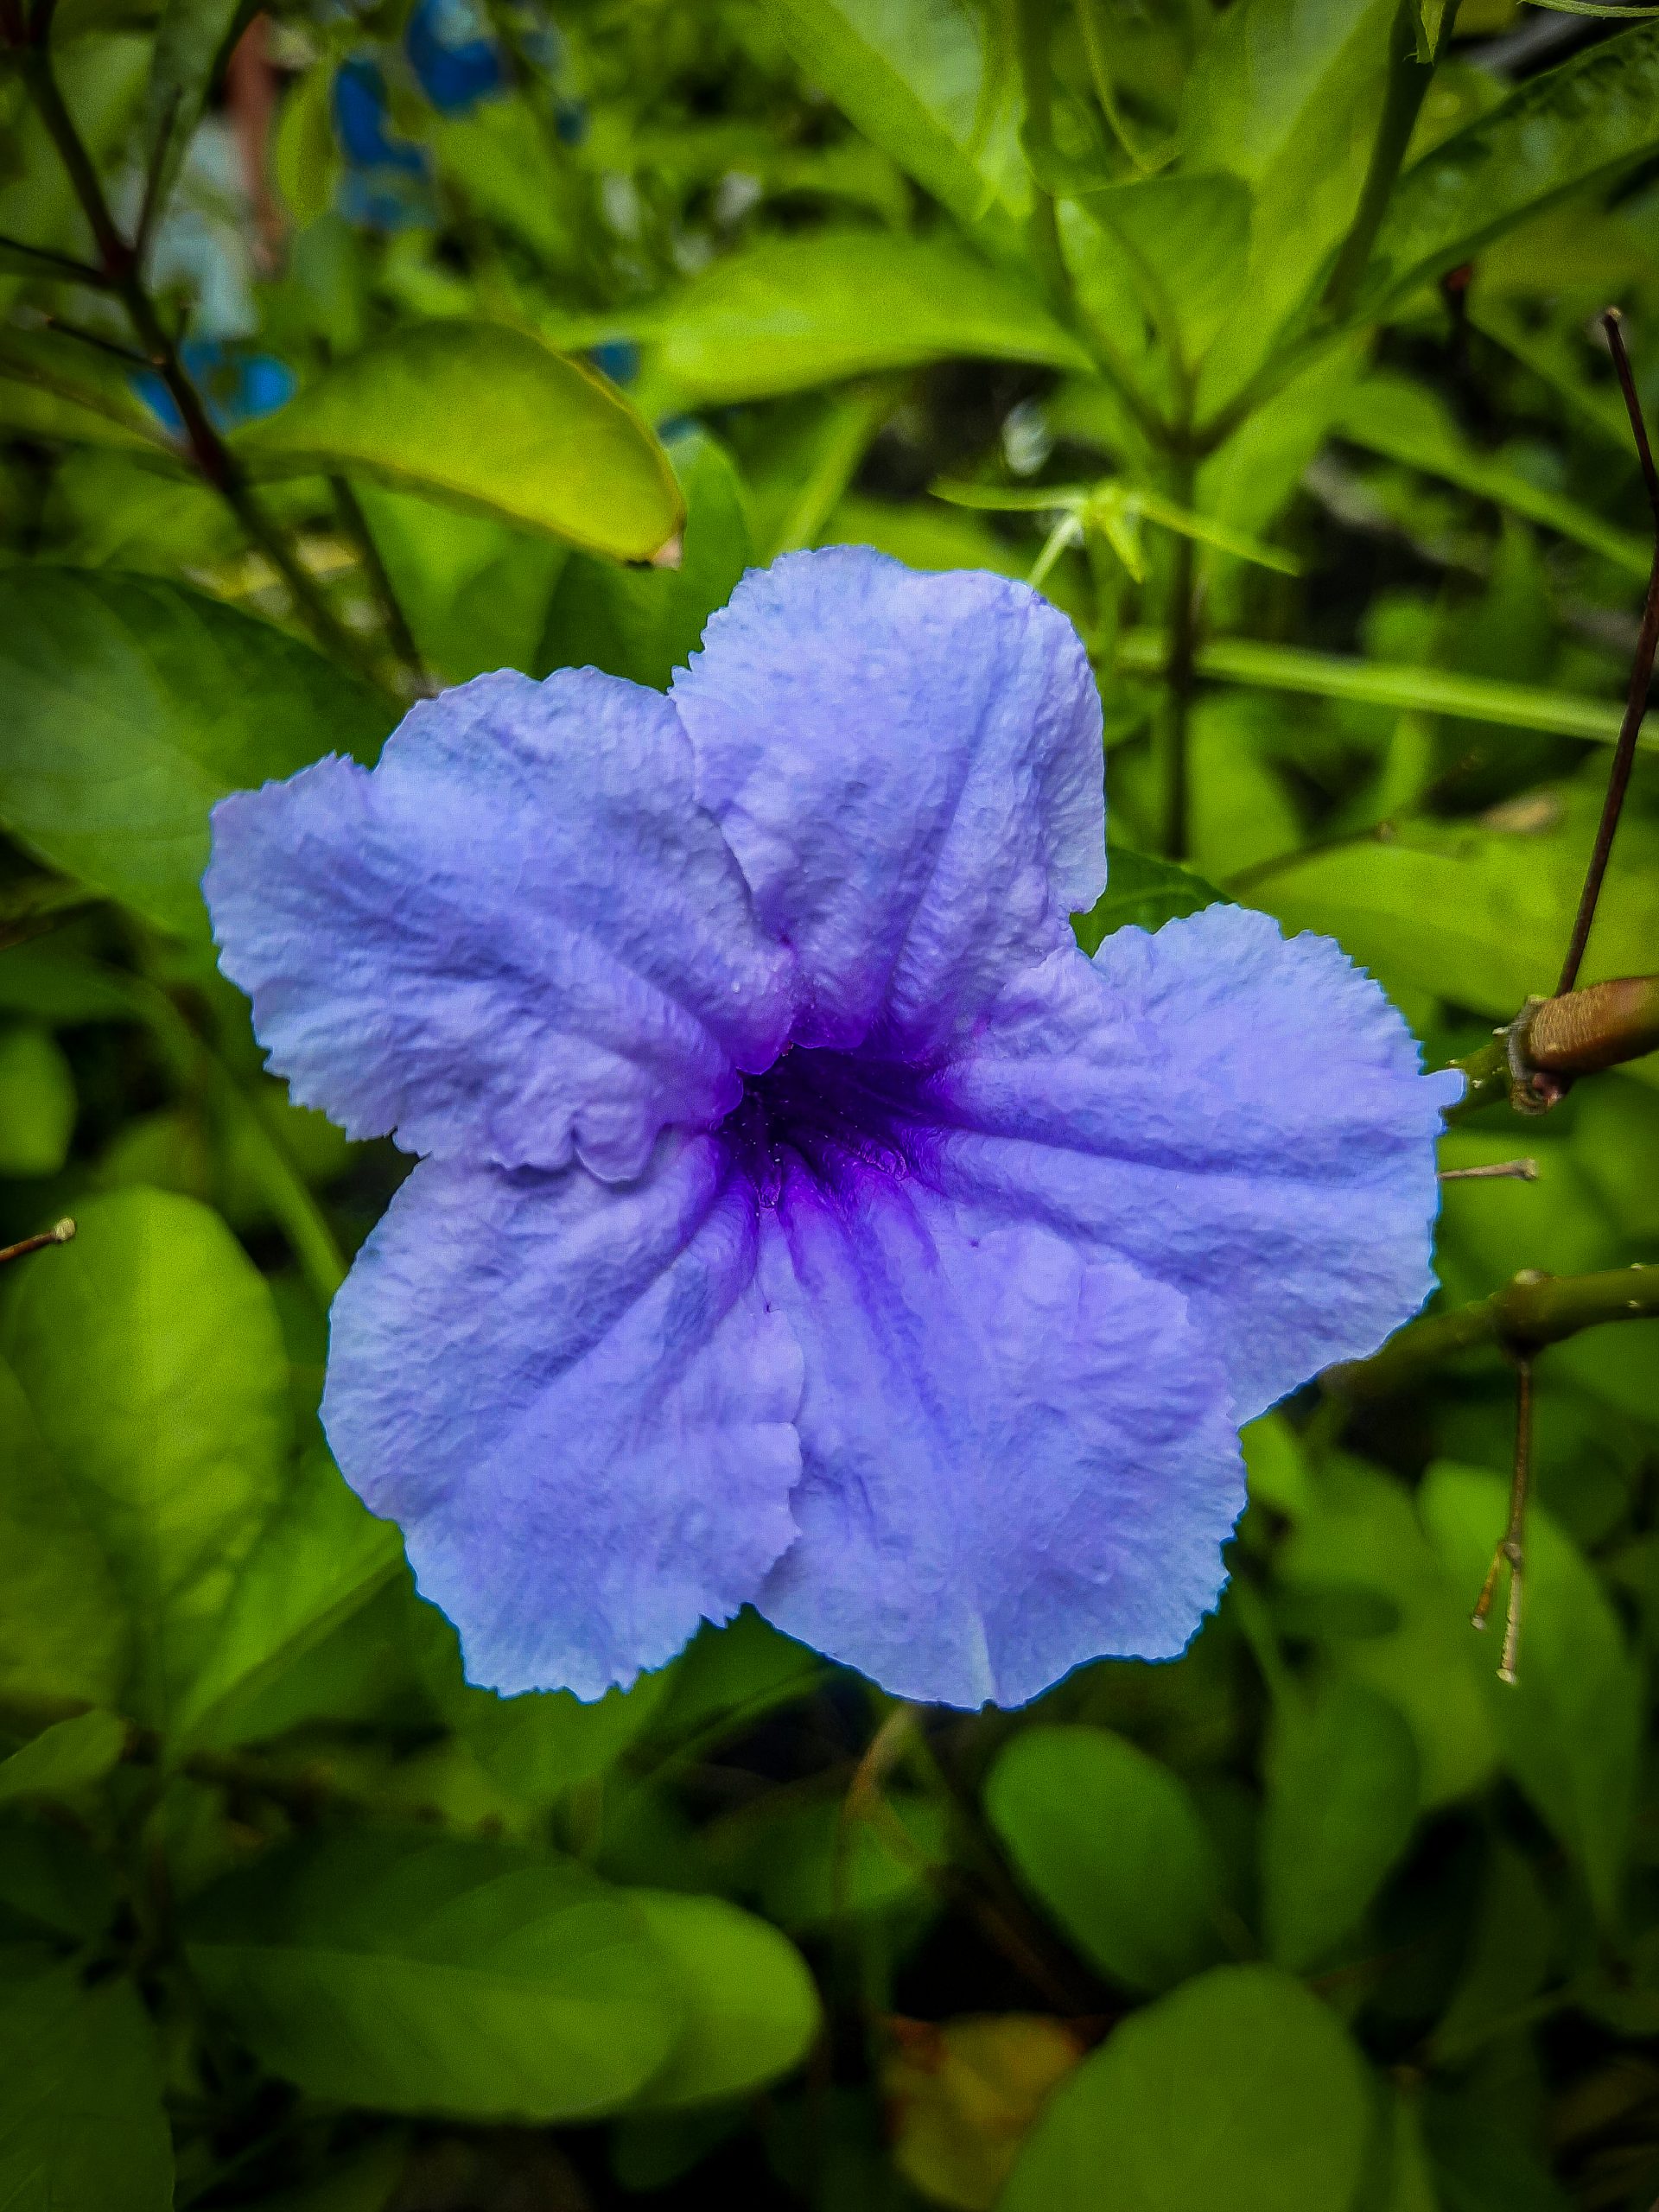 A beautiful violet flower